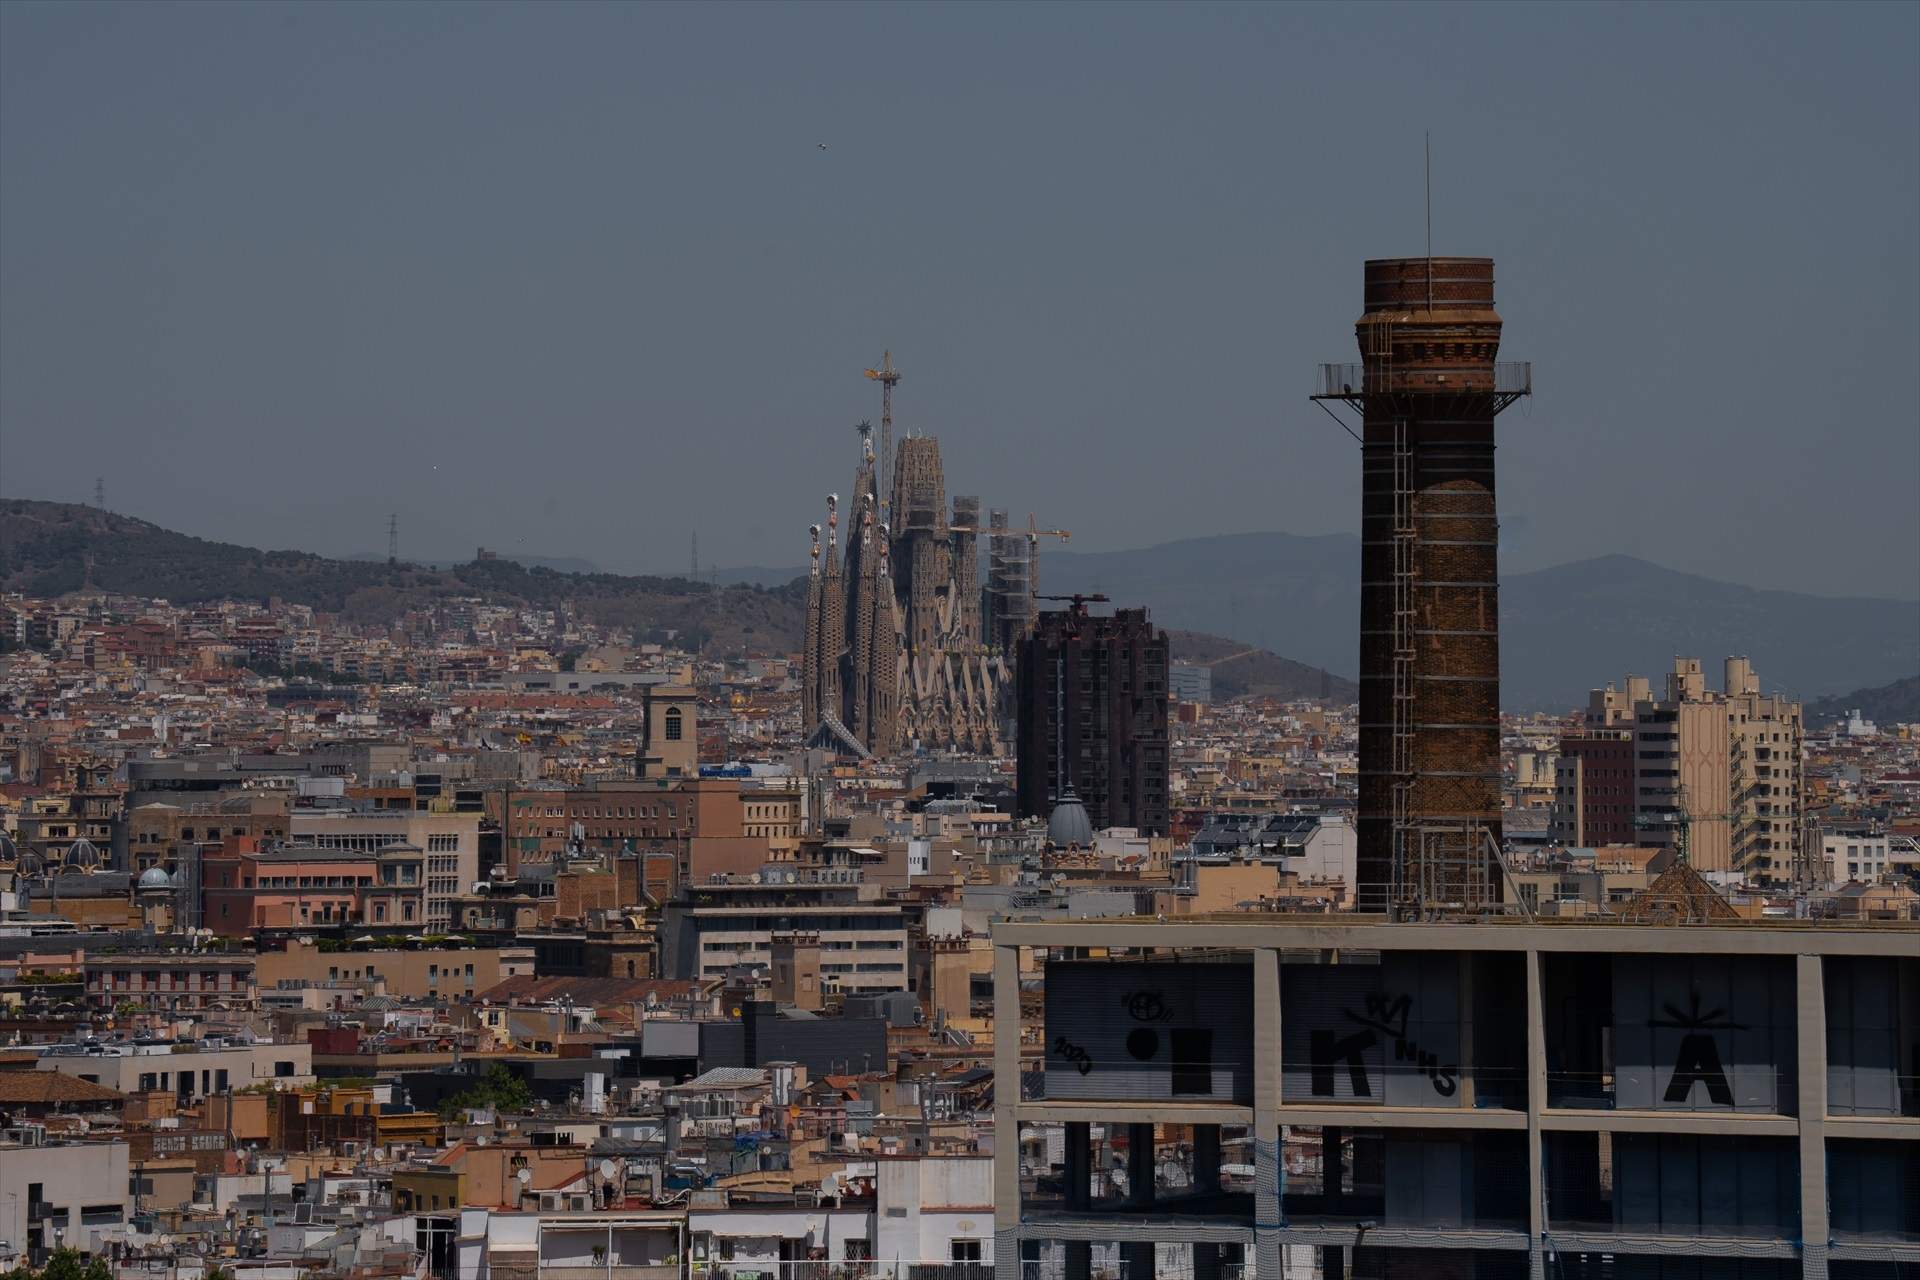 vivienda panoramica barcelona europa press